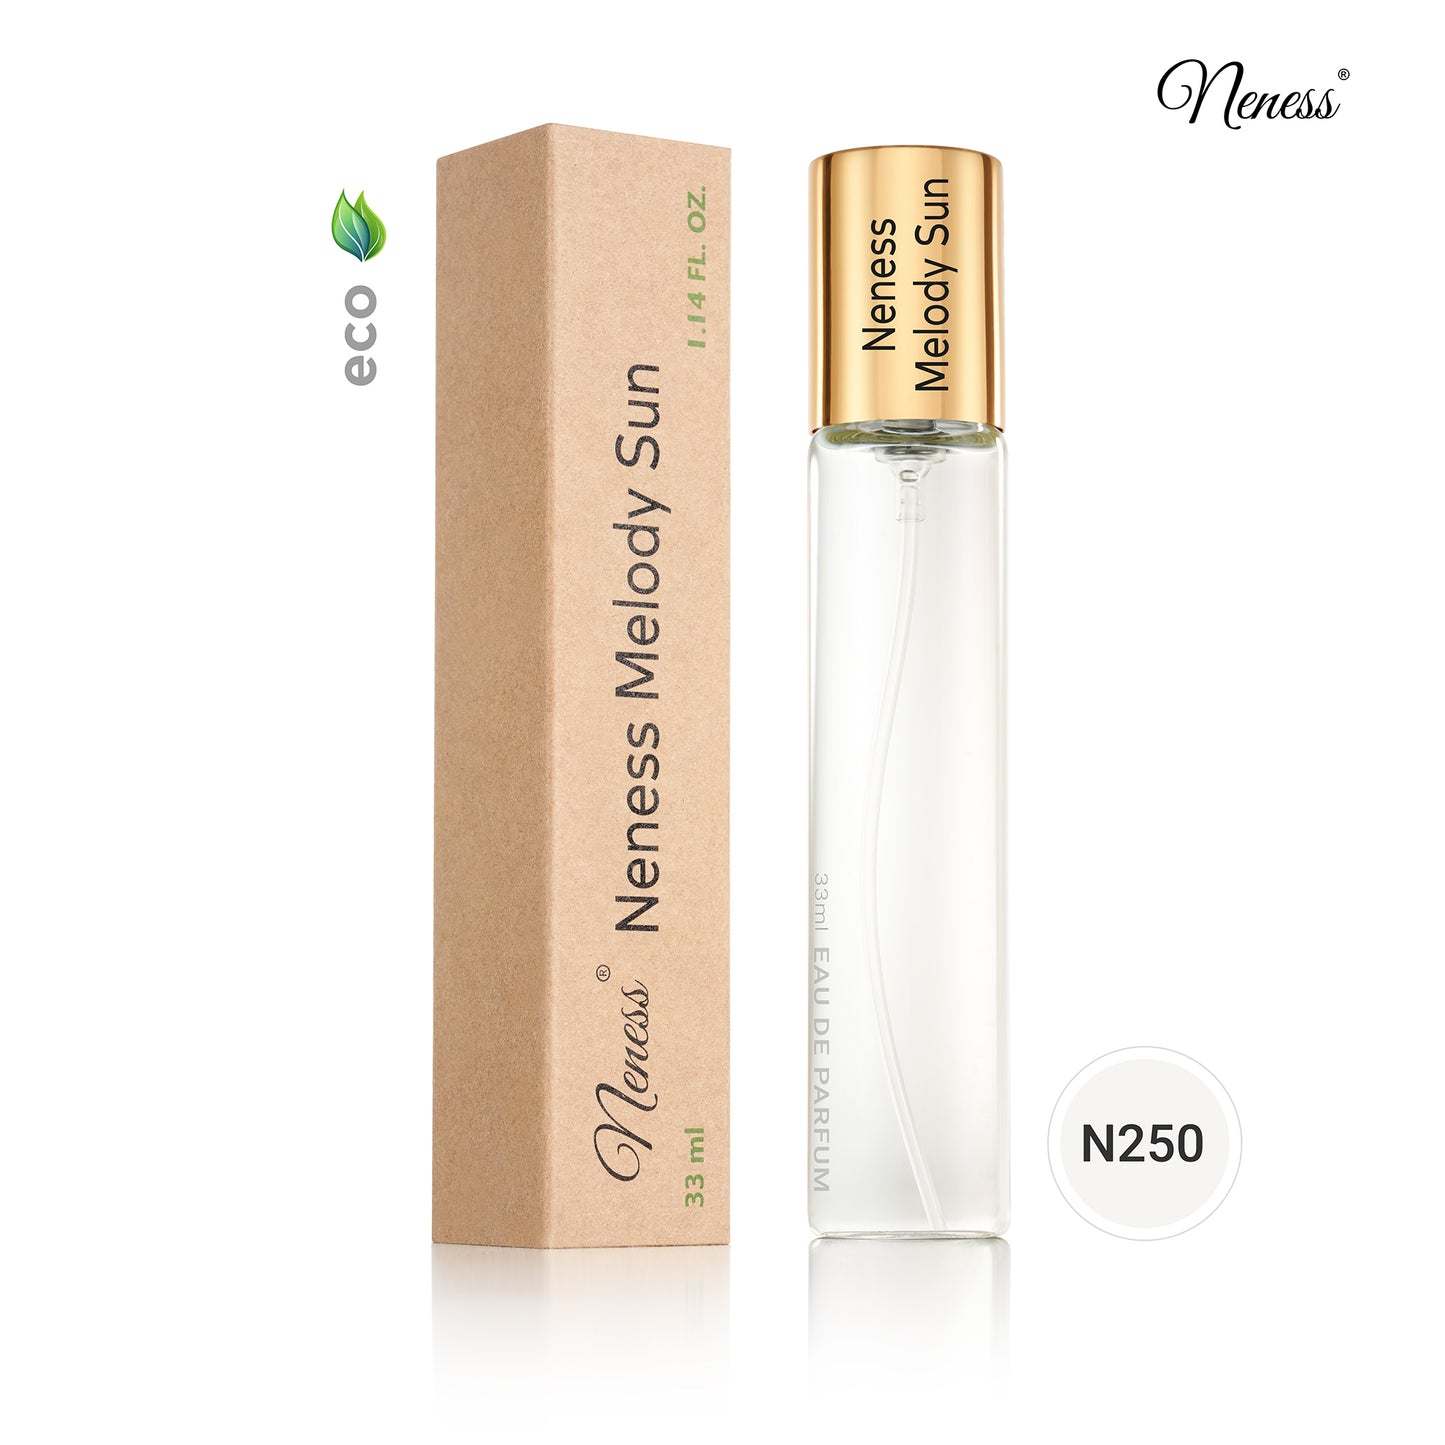 N250. Neness Melody Sun - 33 ml - Unisex Perfumes